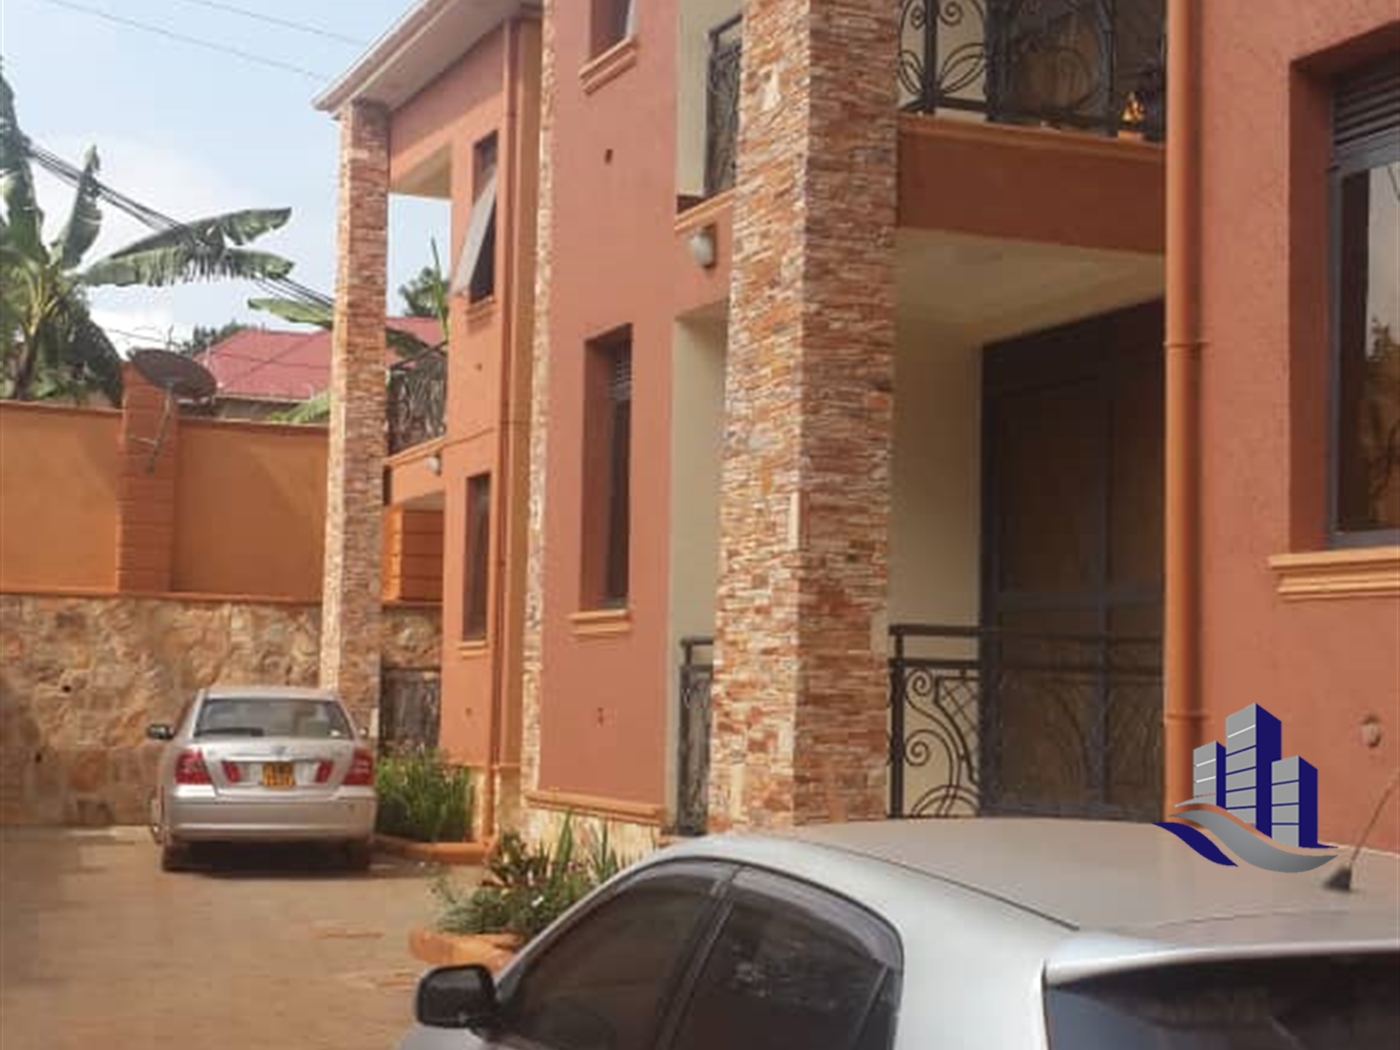 Apartment block for sale in Komamboga Wakiso